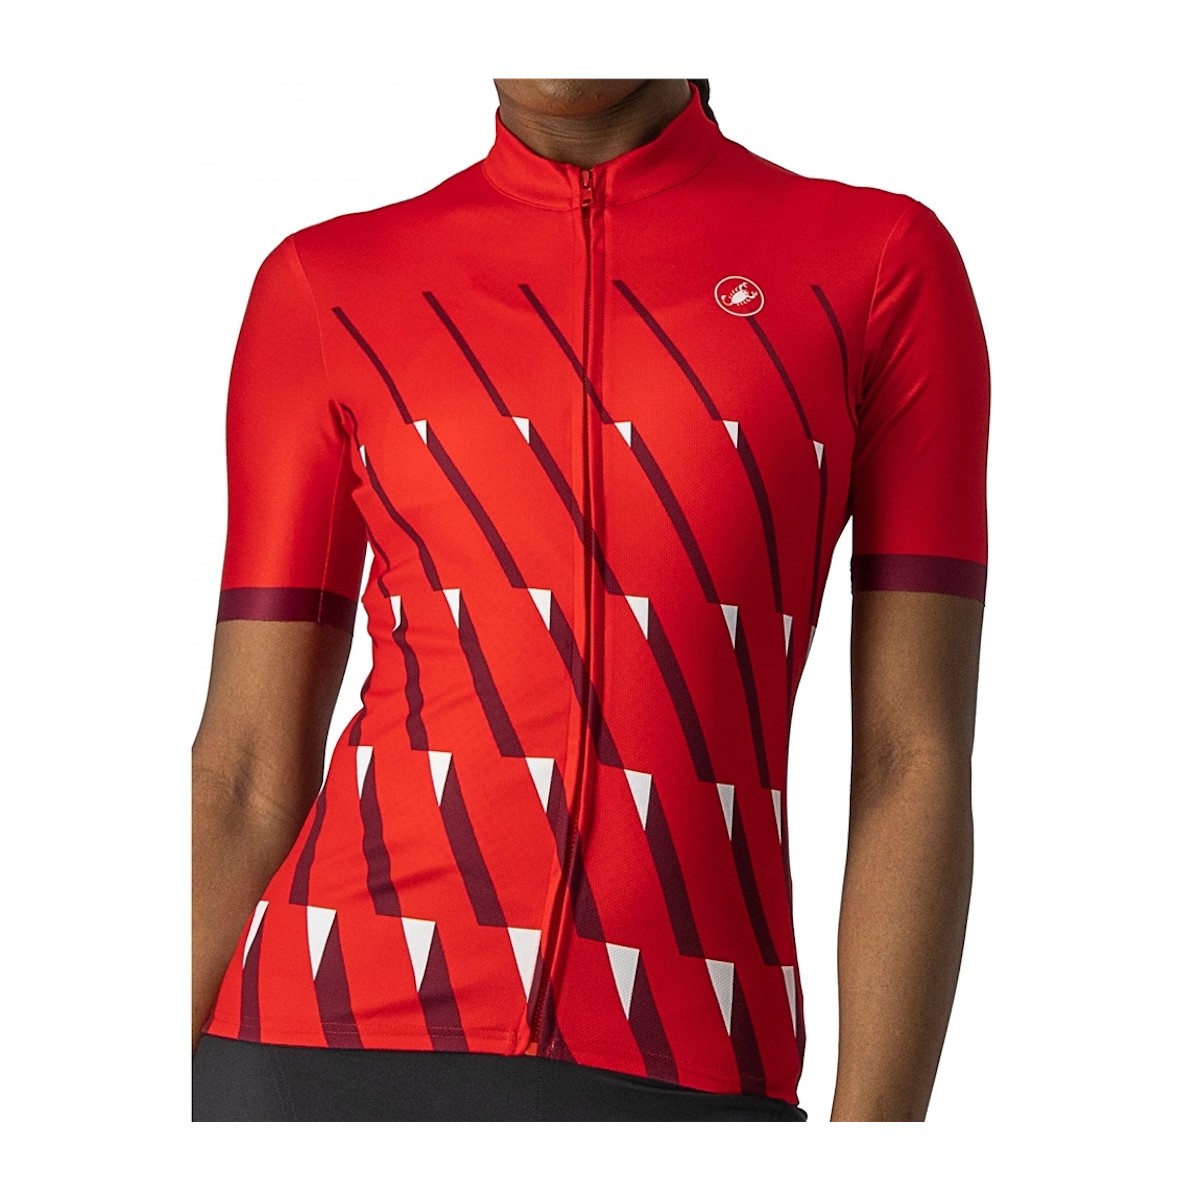 CASTELLI PENDIO W cycling shirt - red